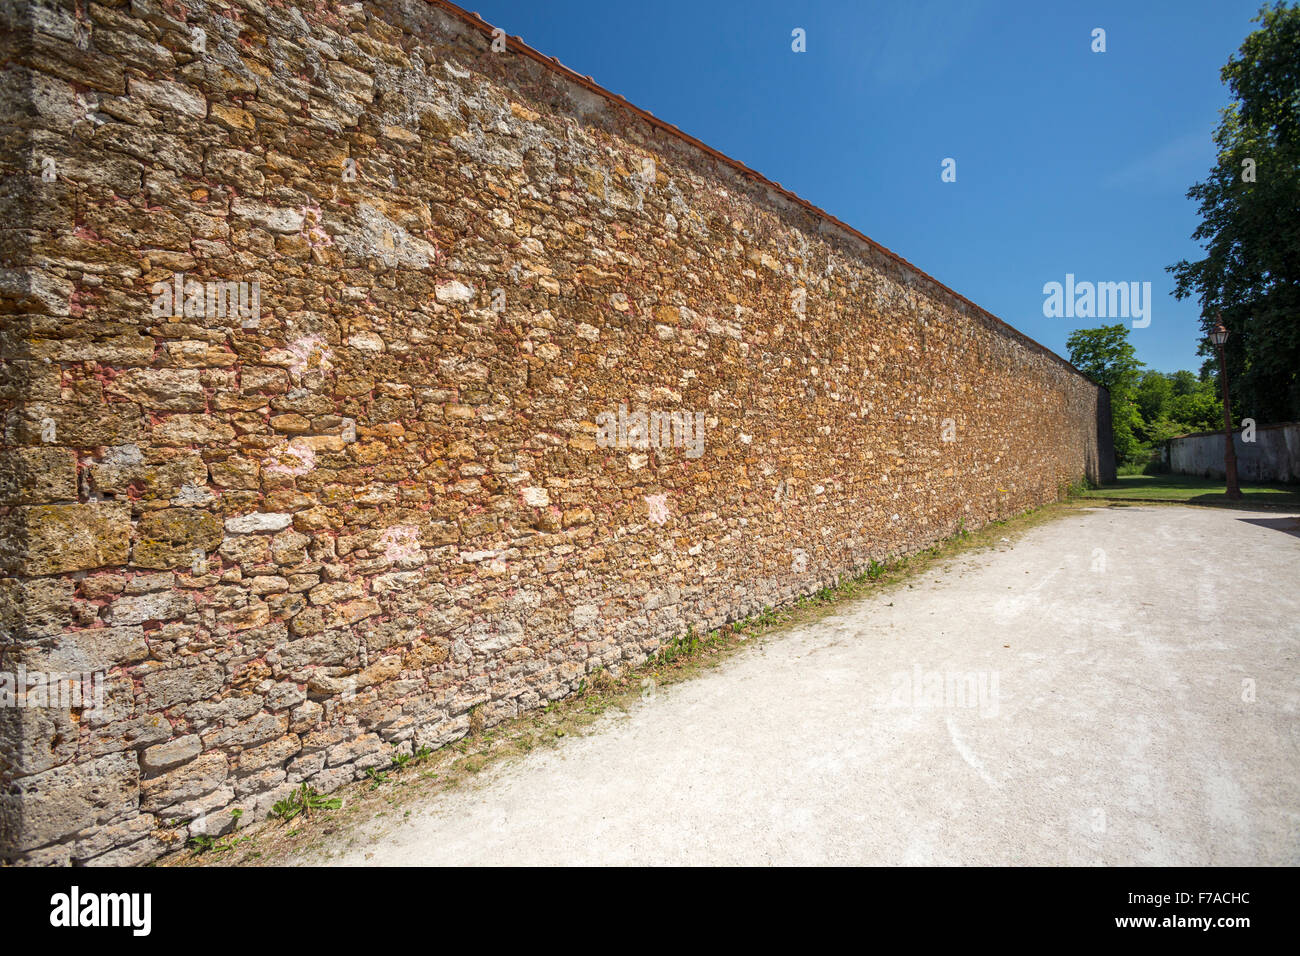 The gritstone outer walls of the old prison of Coulommiers (France). Mur en pierre meulière de l'ancienne prison de Coulommiers. Stock Photo